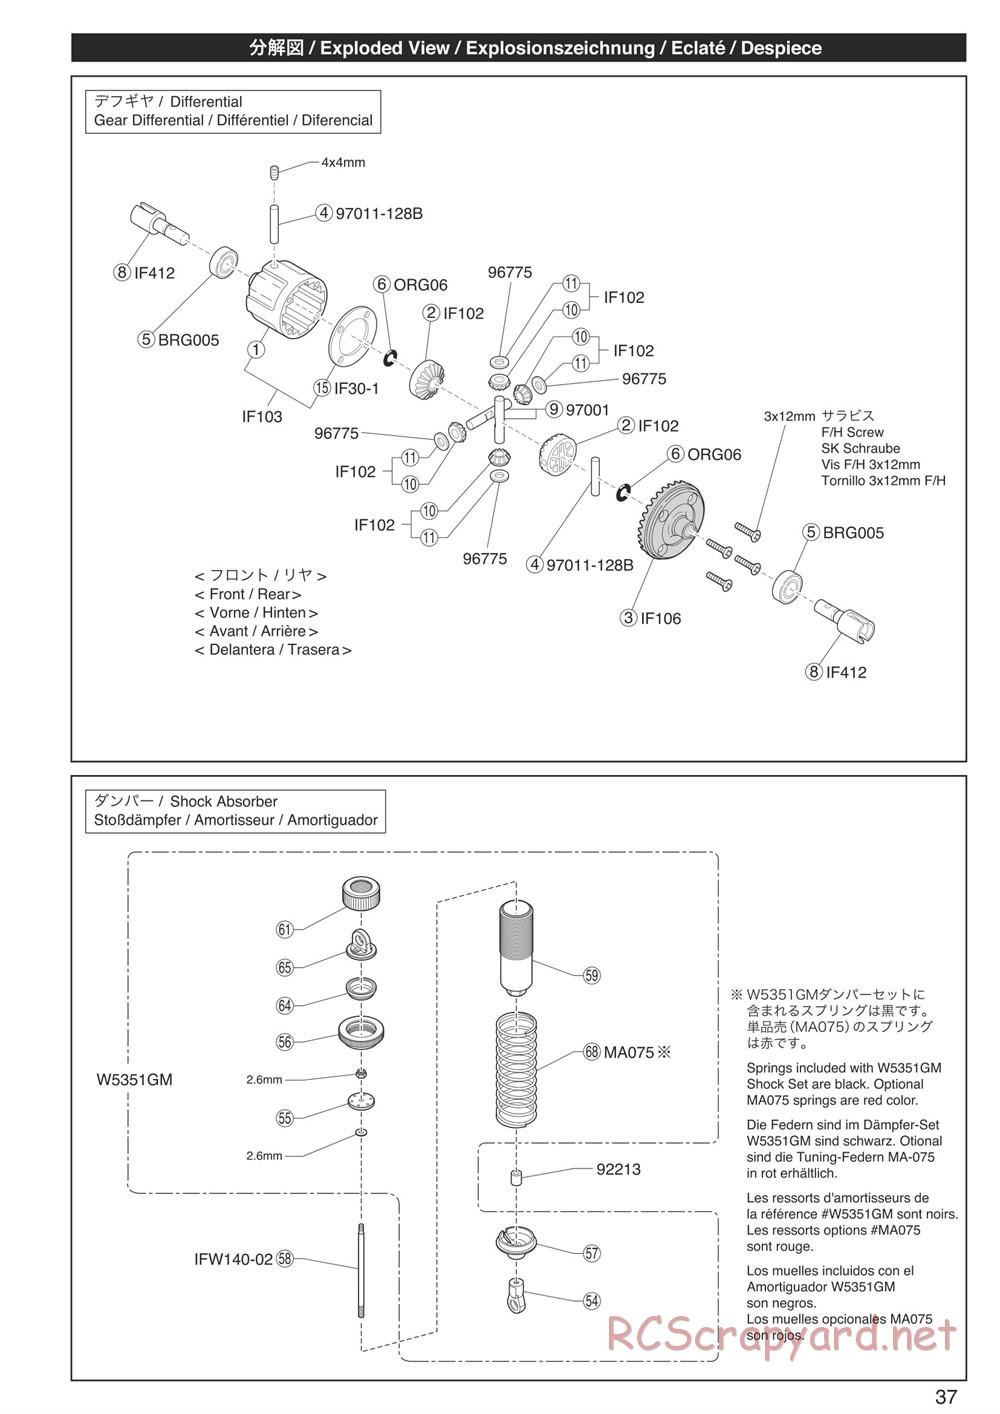 Kyosho - FO-XX 2.0 - Manual - Page 37